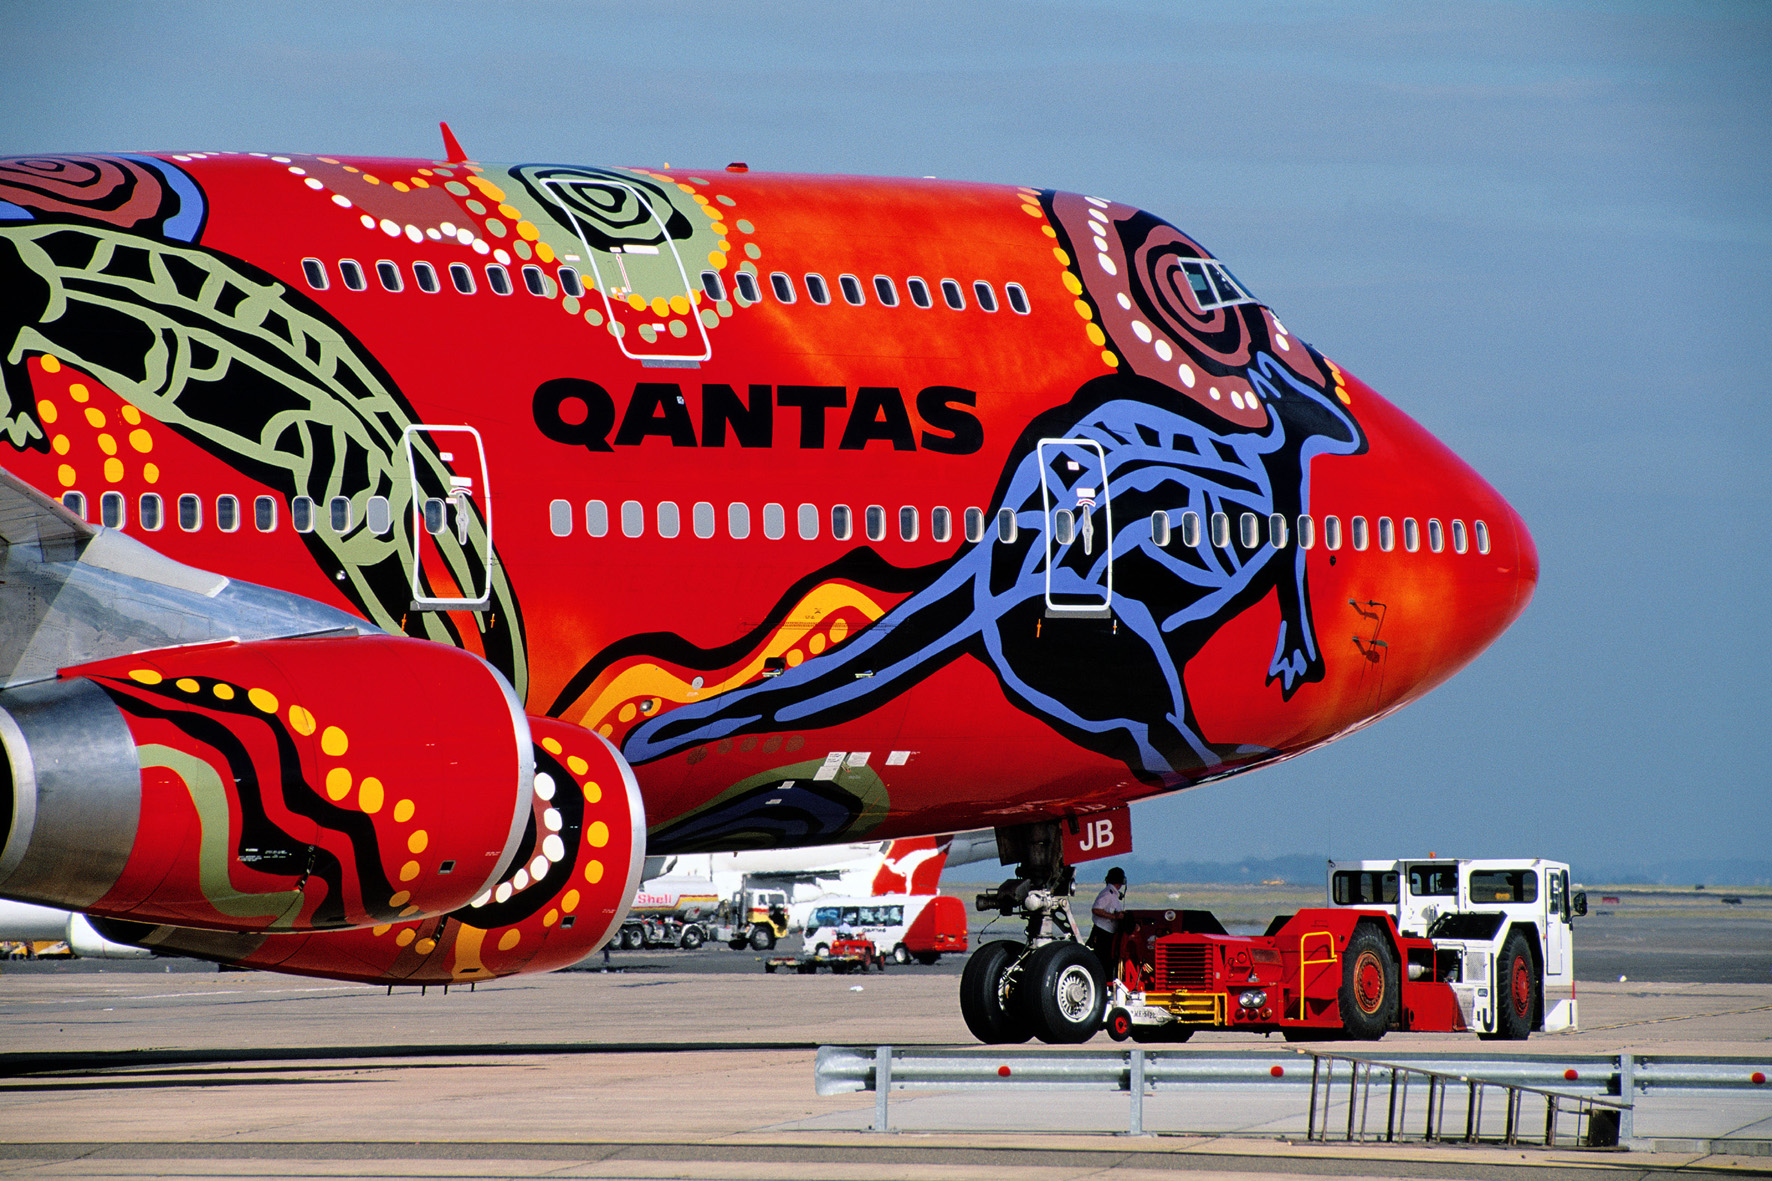 Qantas says goodbye to the Jumbo Jet